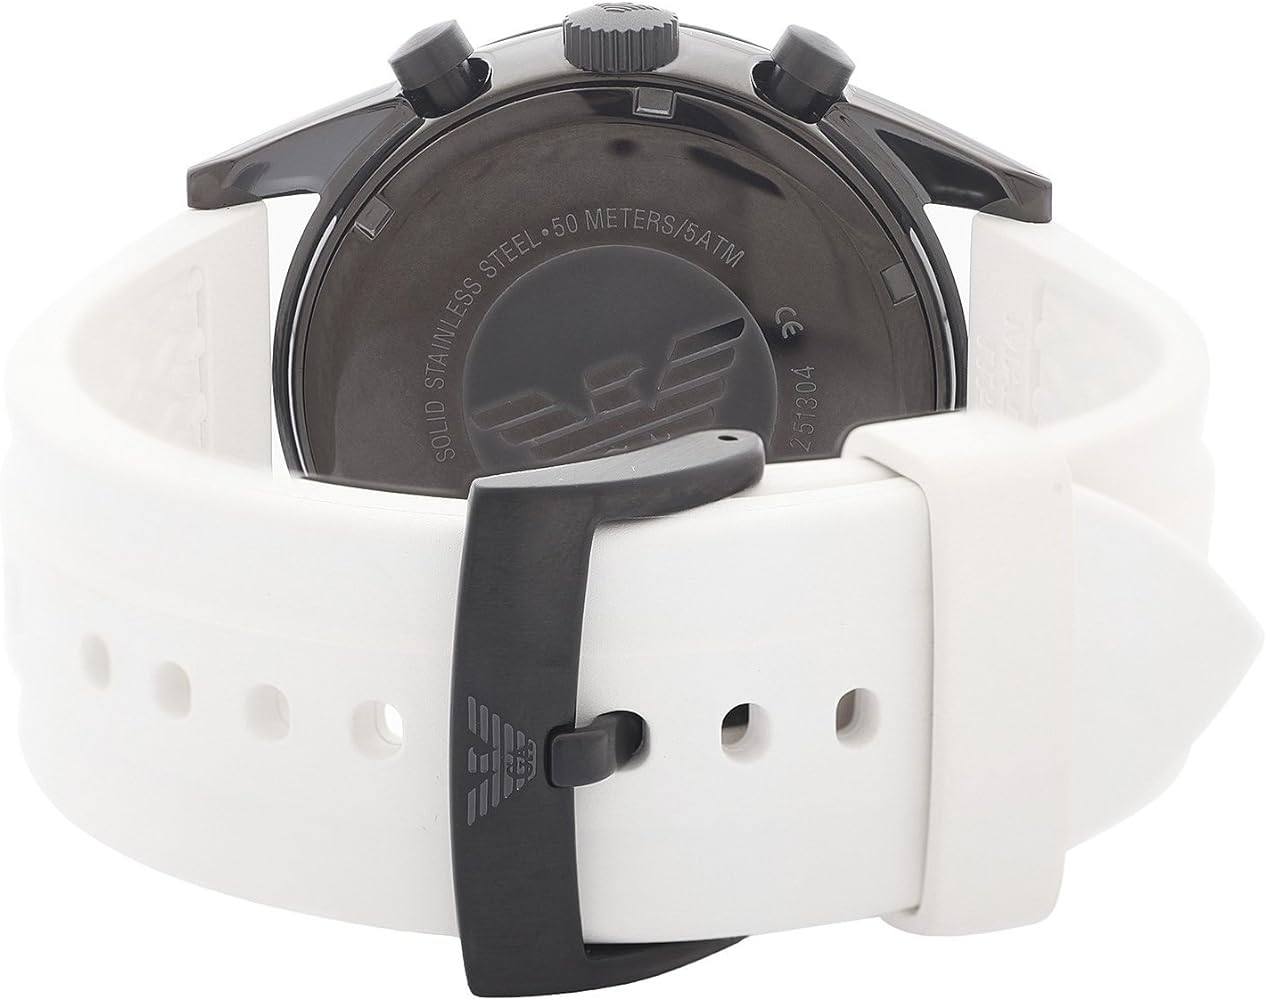 Emporio Armani Sportivo Chronograph Black Dial White Rubber Strap Watch For Men - AR6112